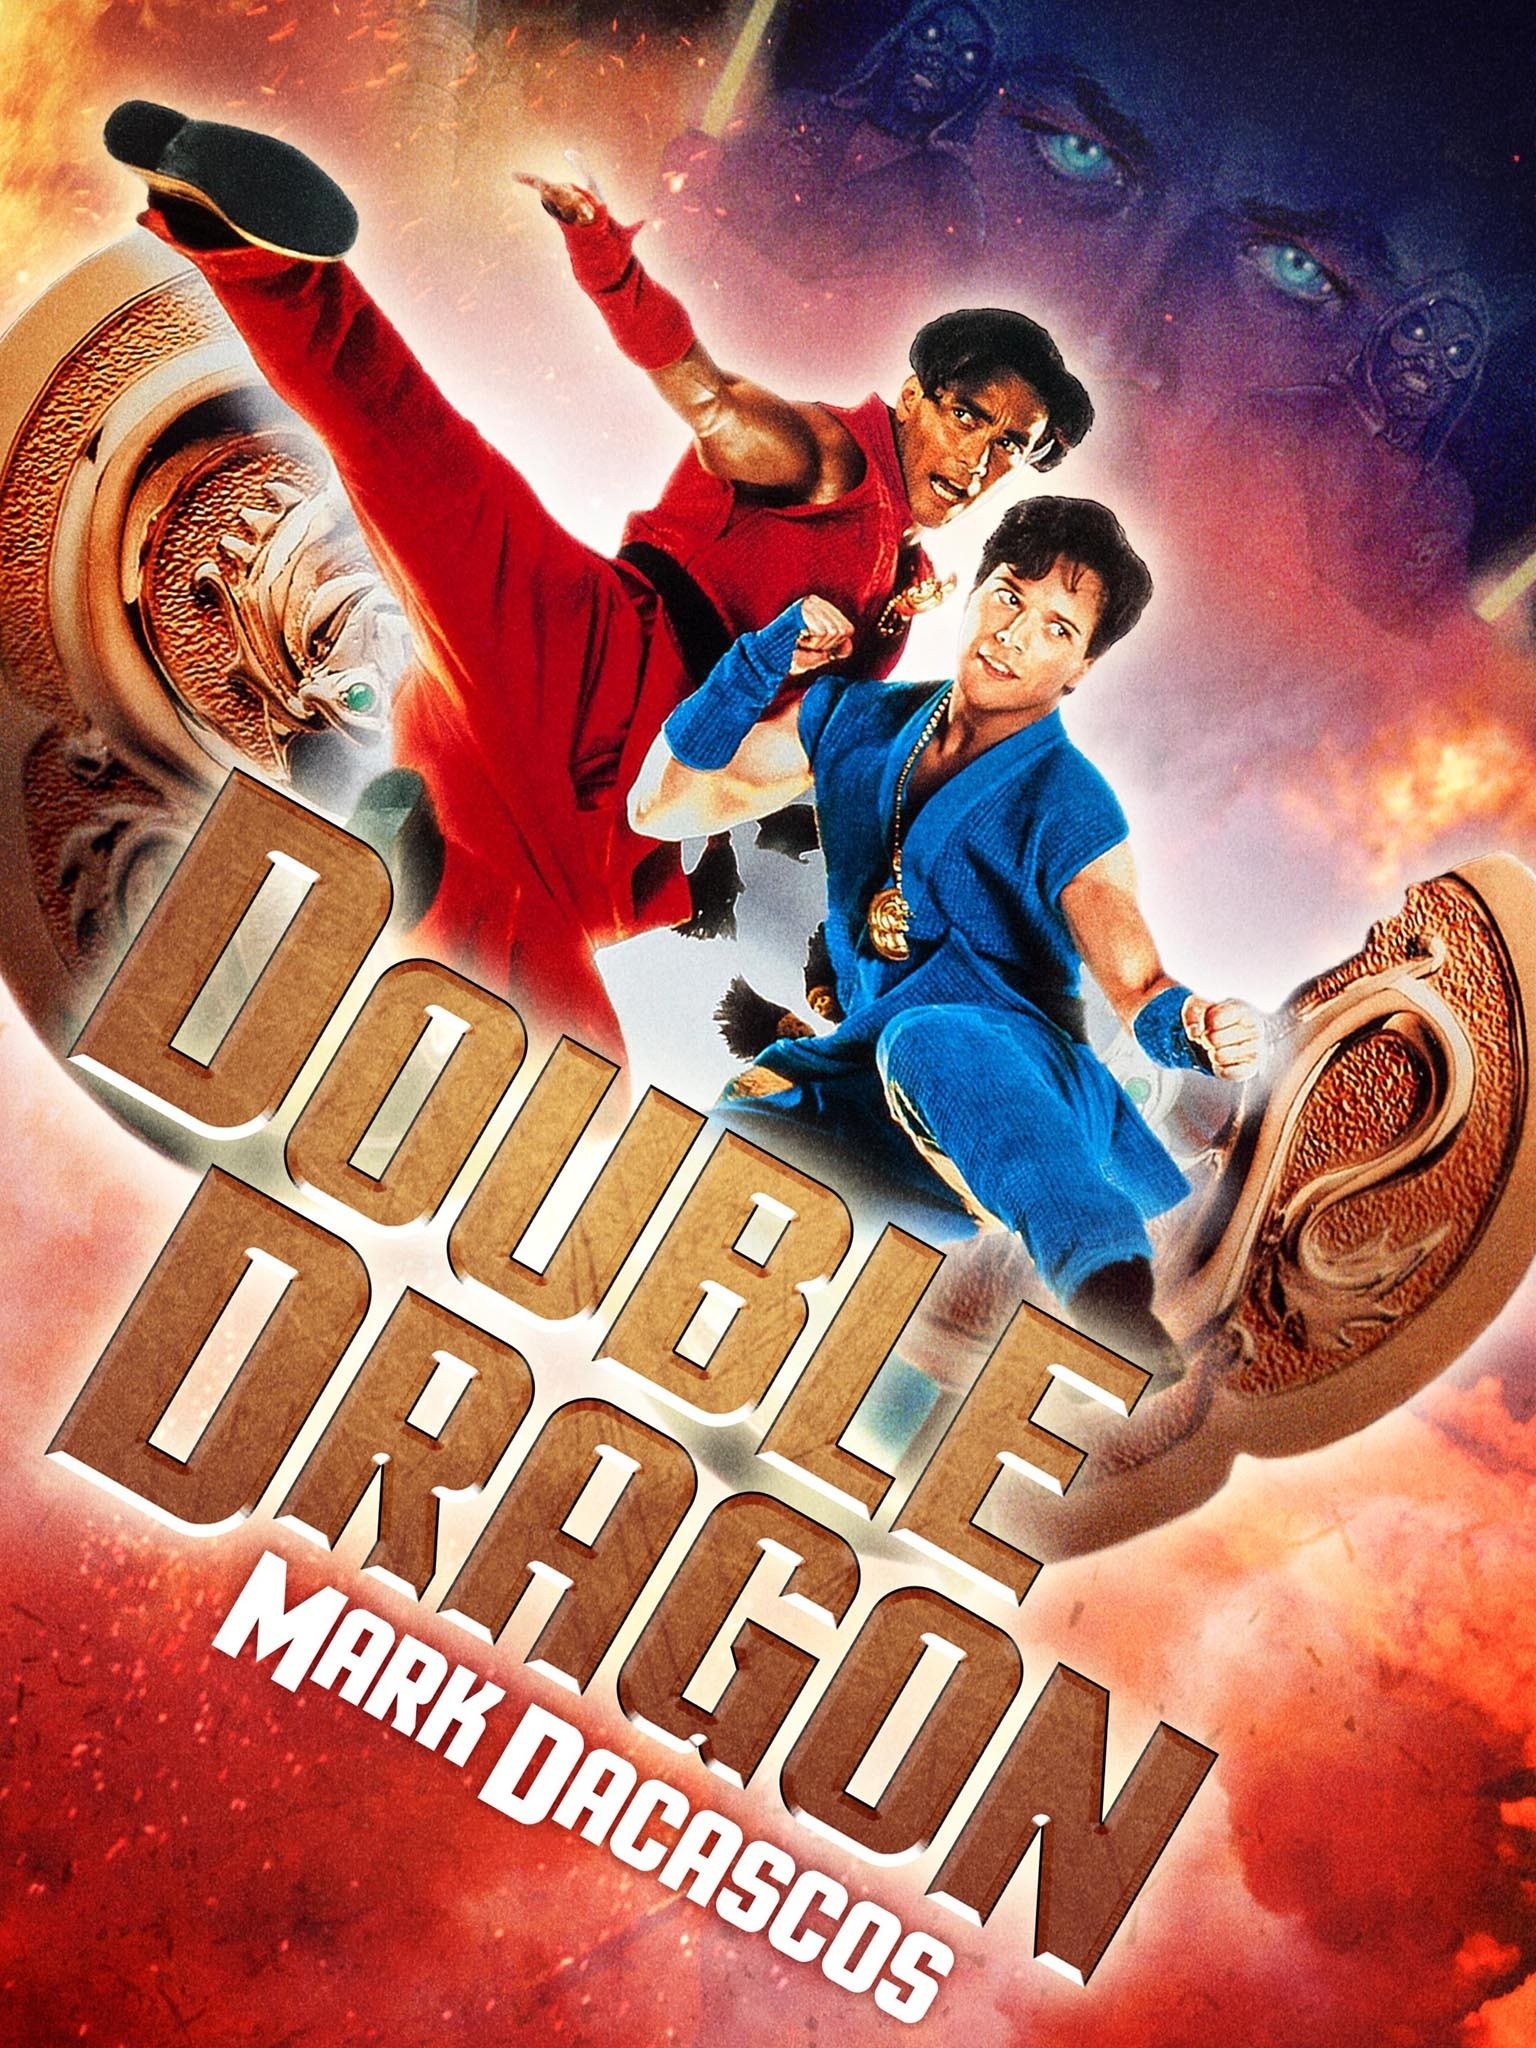 Double Dragon (filme) – Wikipédia, a enciclopédia livre